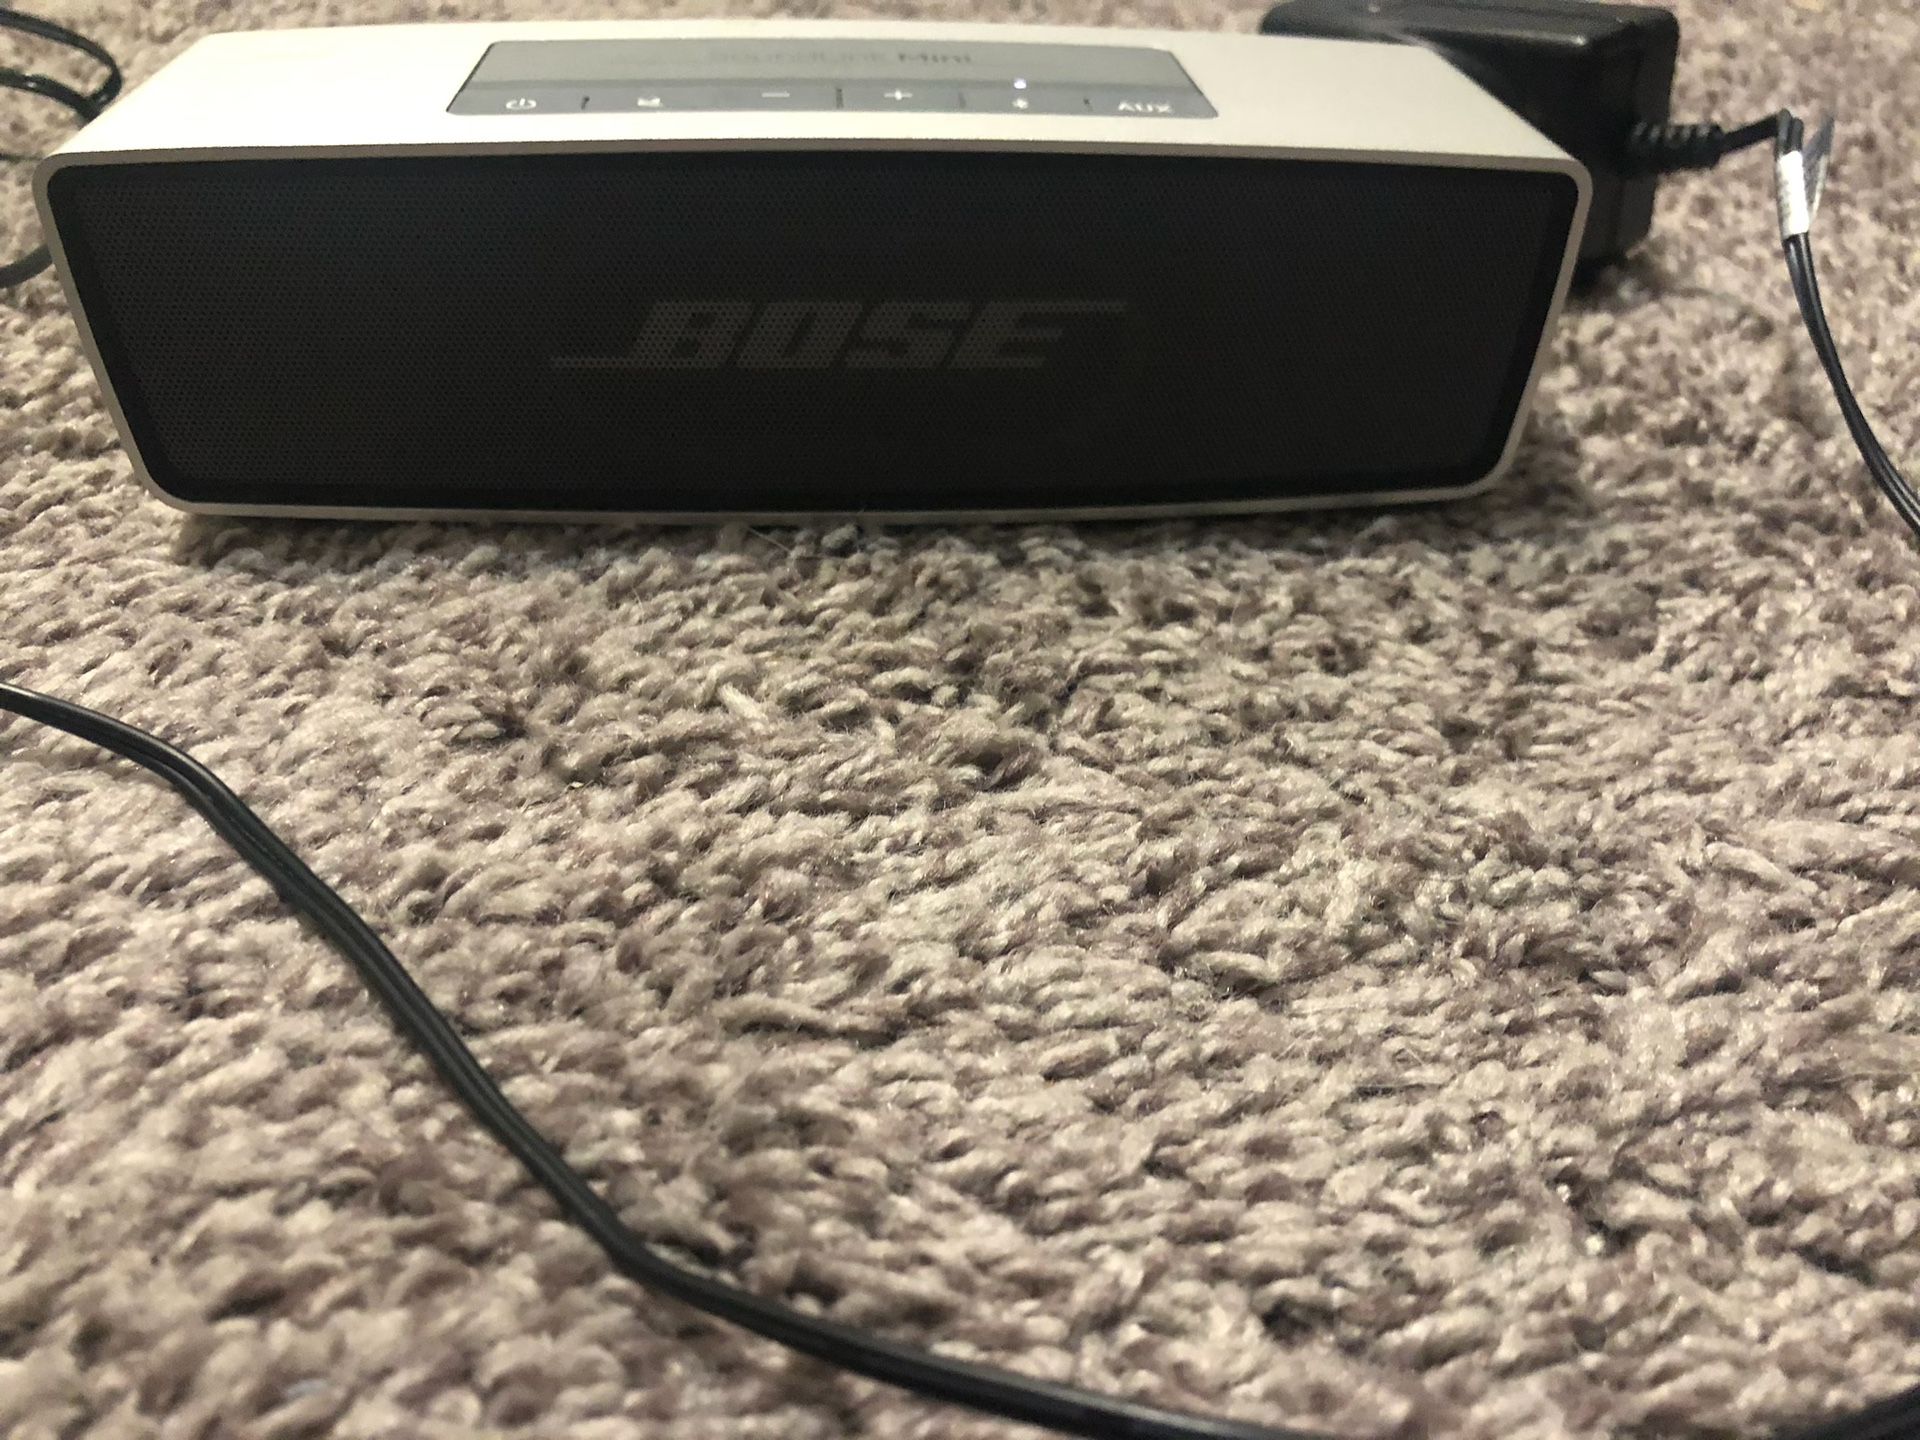 Bose Mini Sound Link 